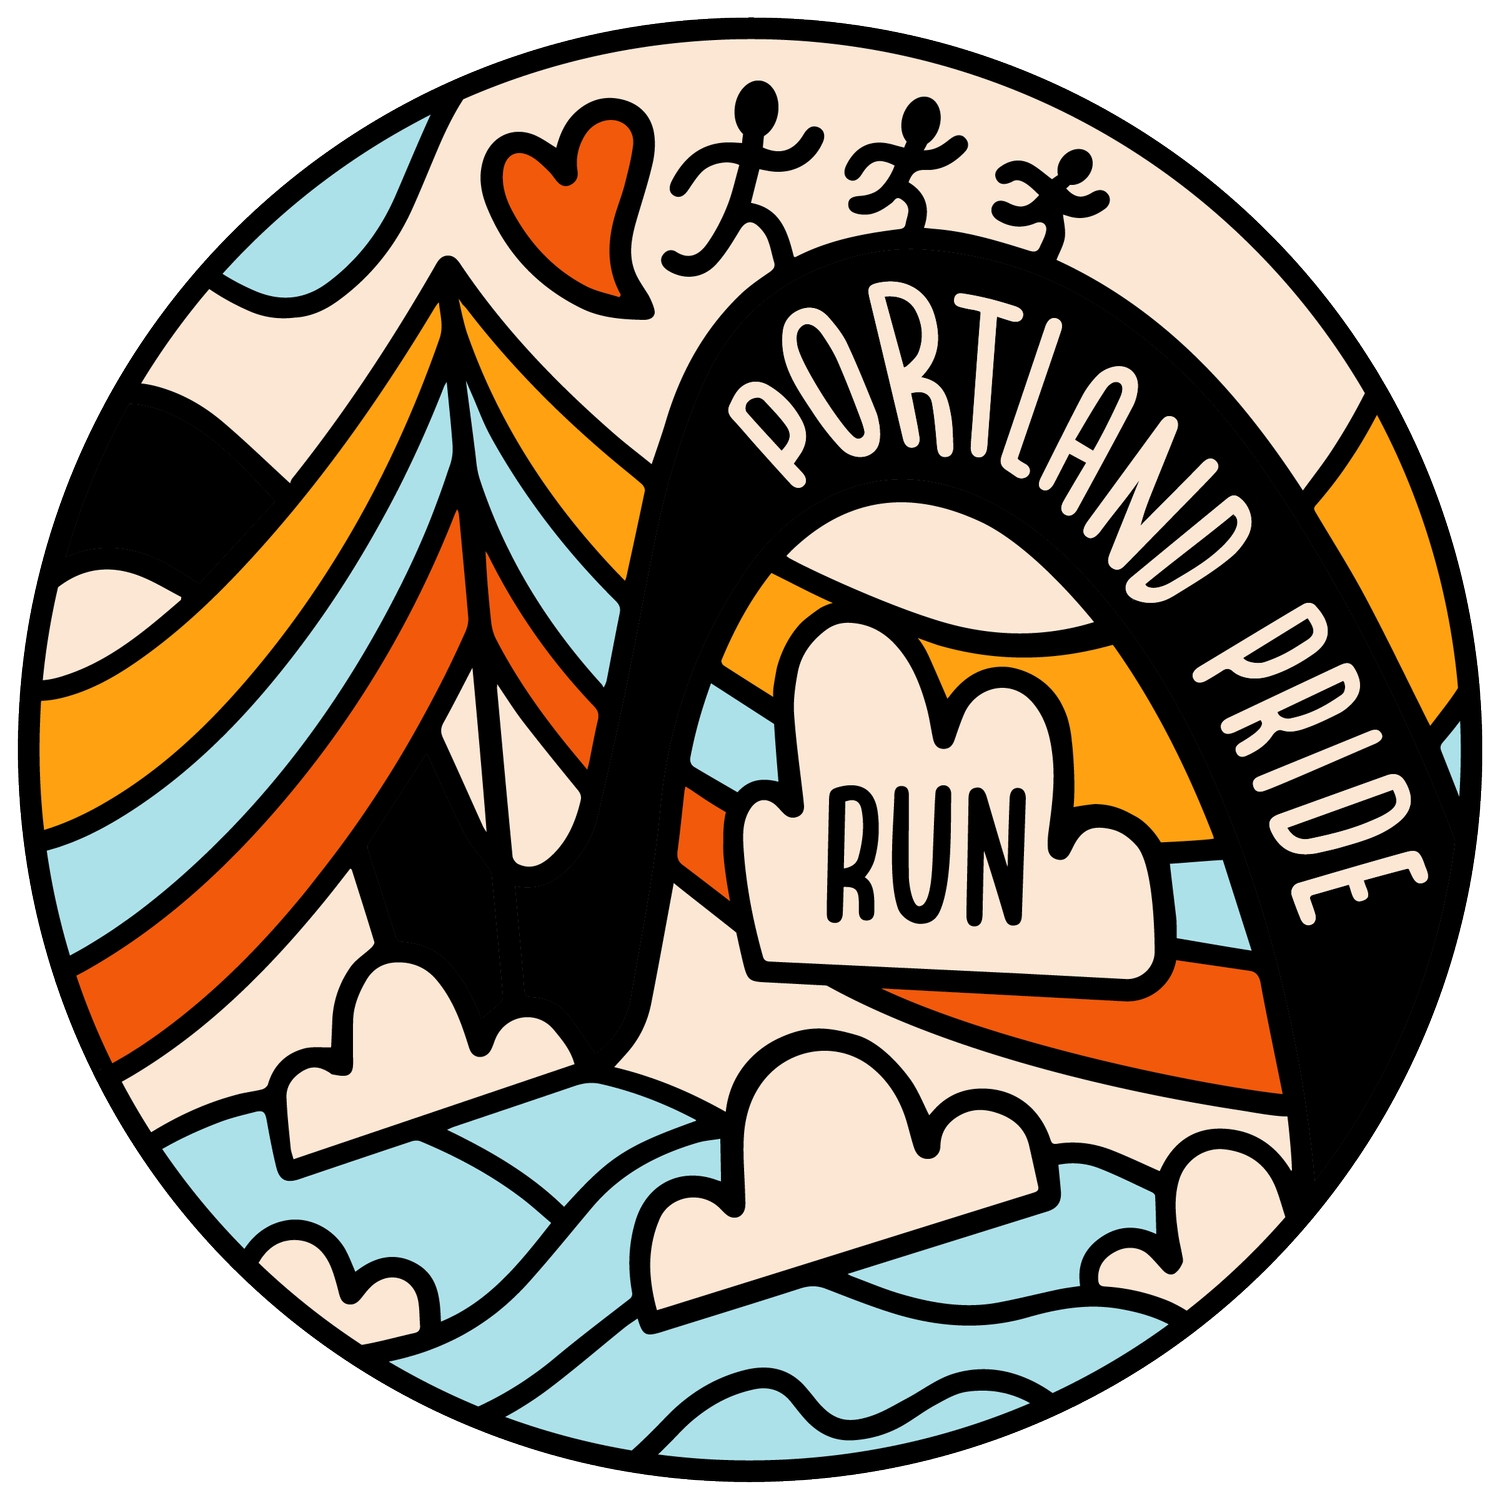 PDX Pride Run logo on RaceRaves